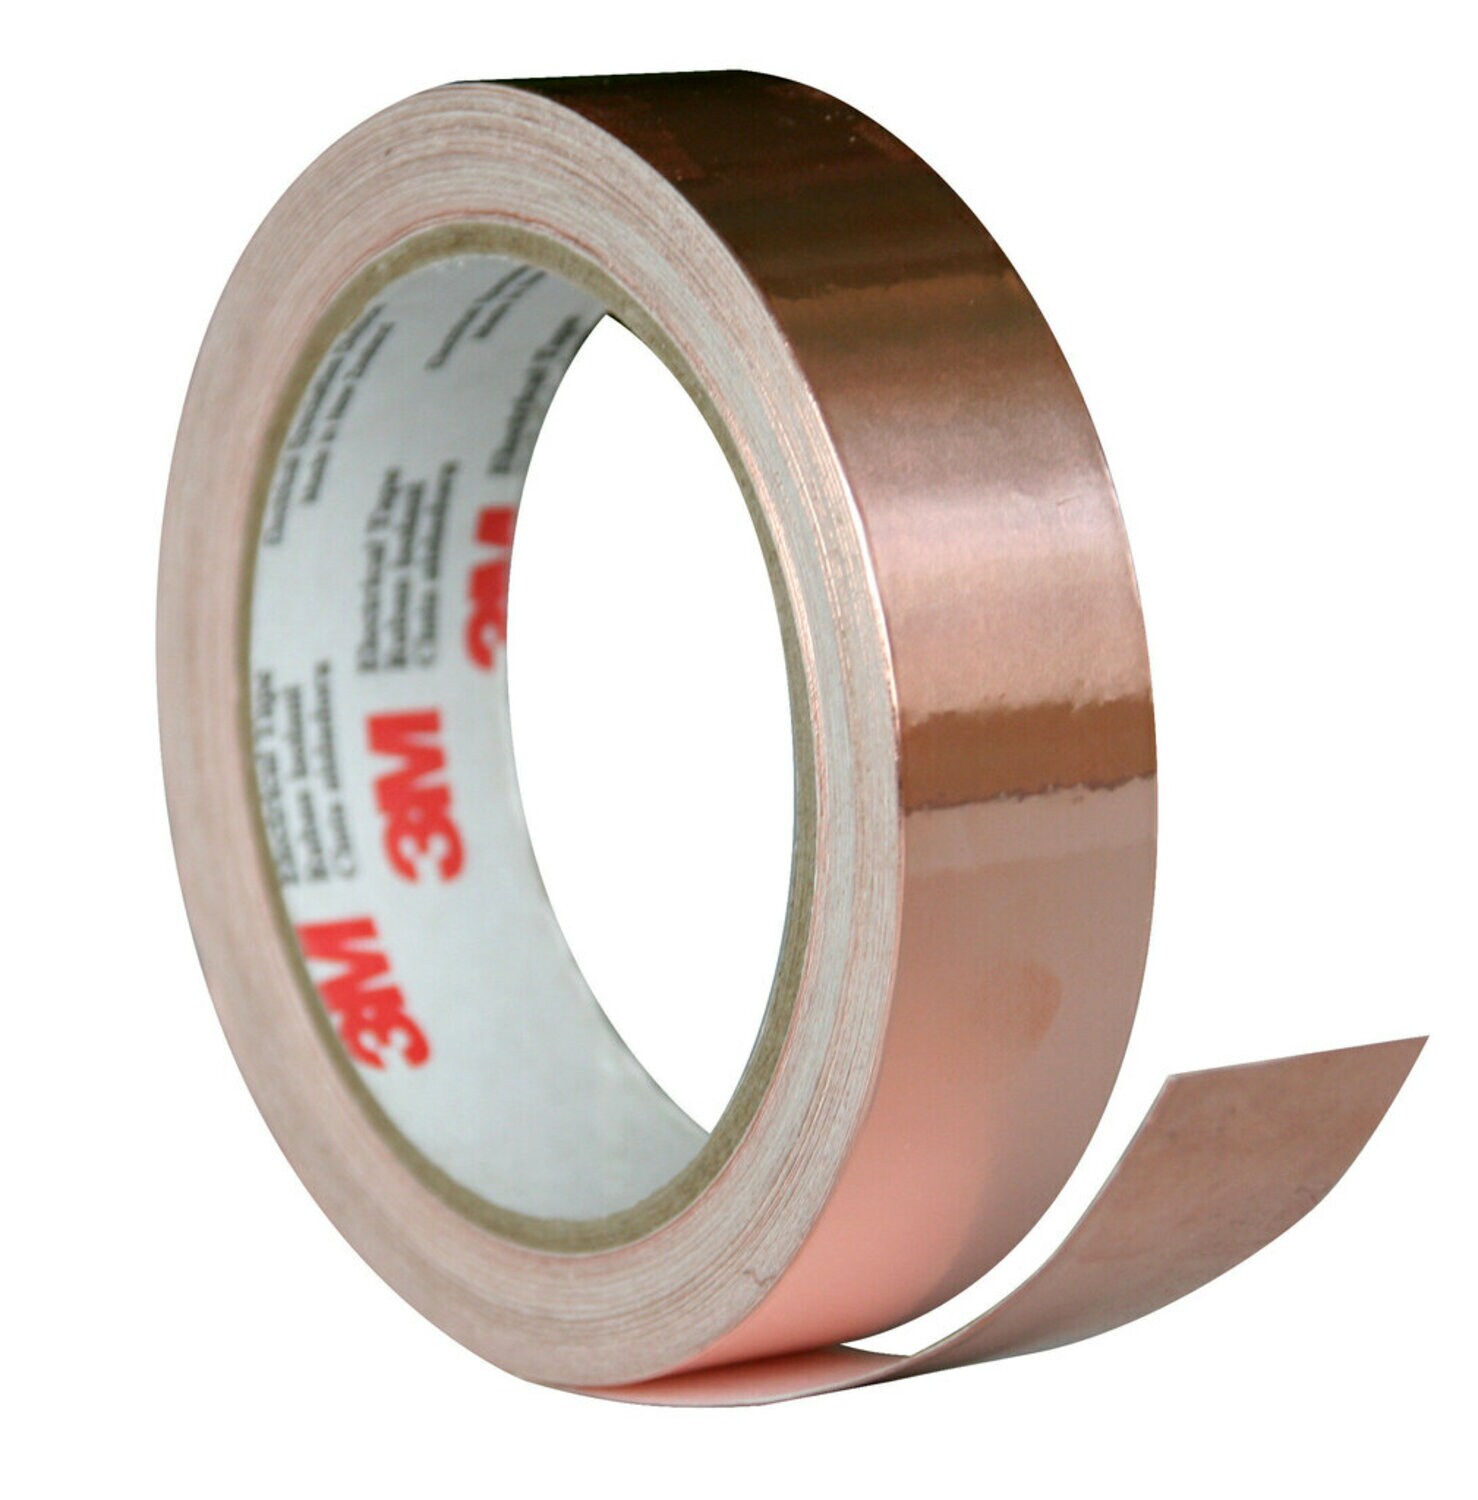 7010349064 - 3M Copper Foil EMI Shielding Tape 1181, 6 in x 18 yd, 3 in Paper Core,
2 Rolls/Case